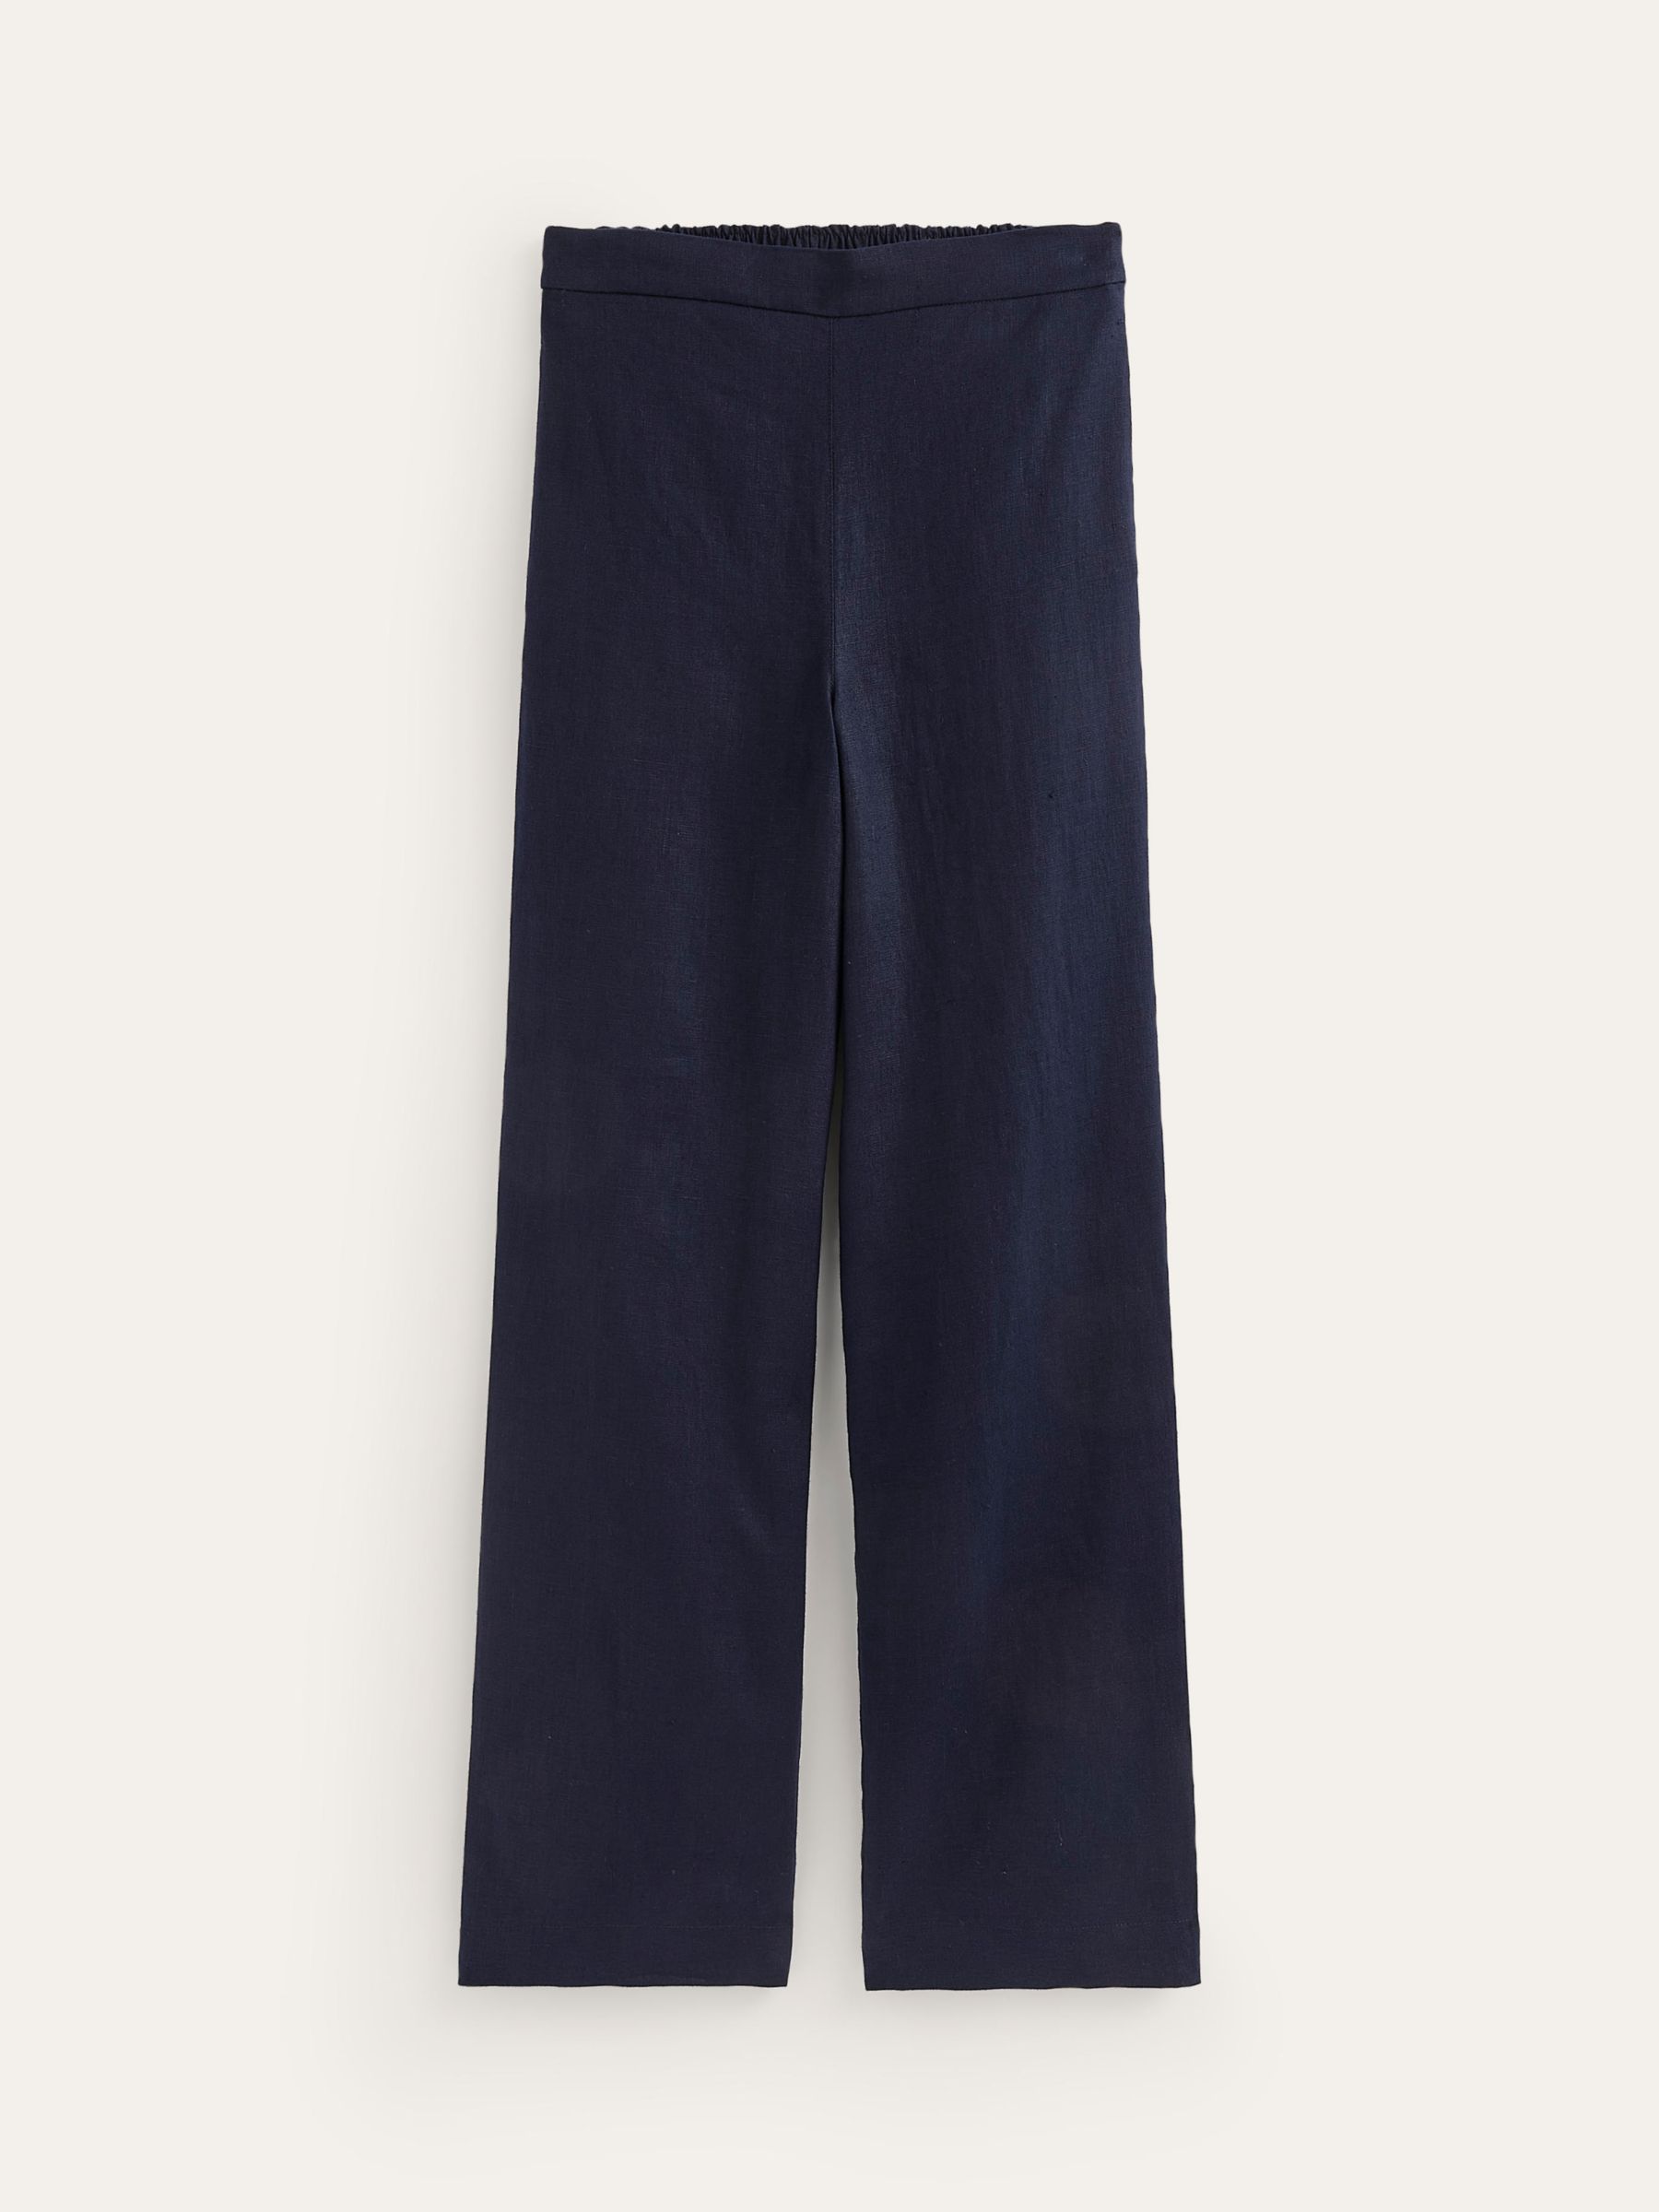 Boden Hampstead Linen Trousers, Navy, 14